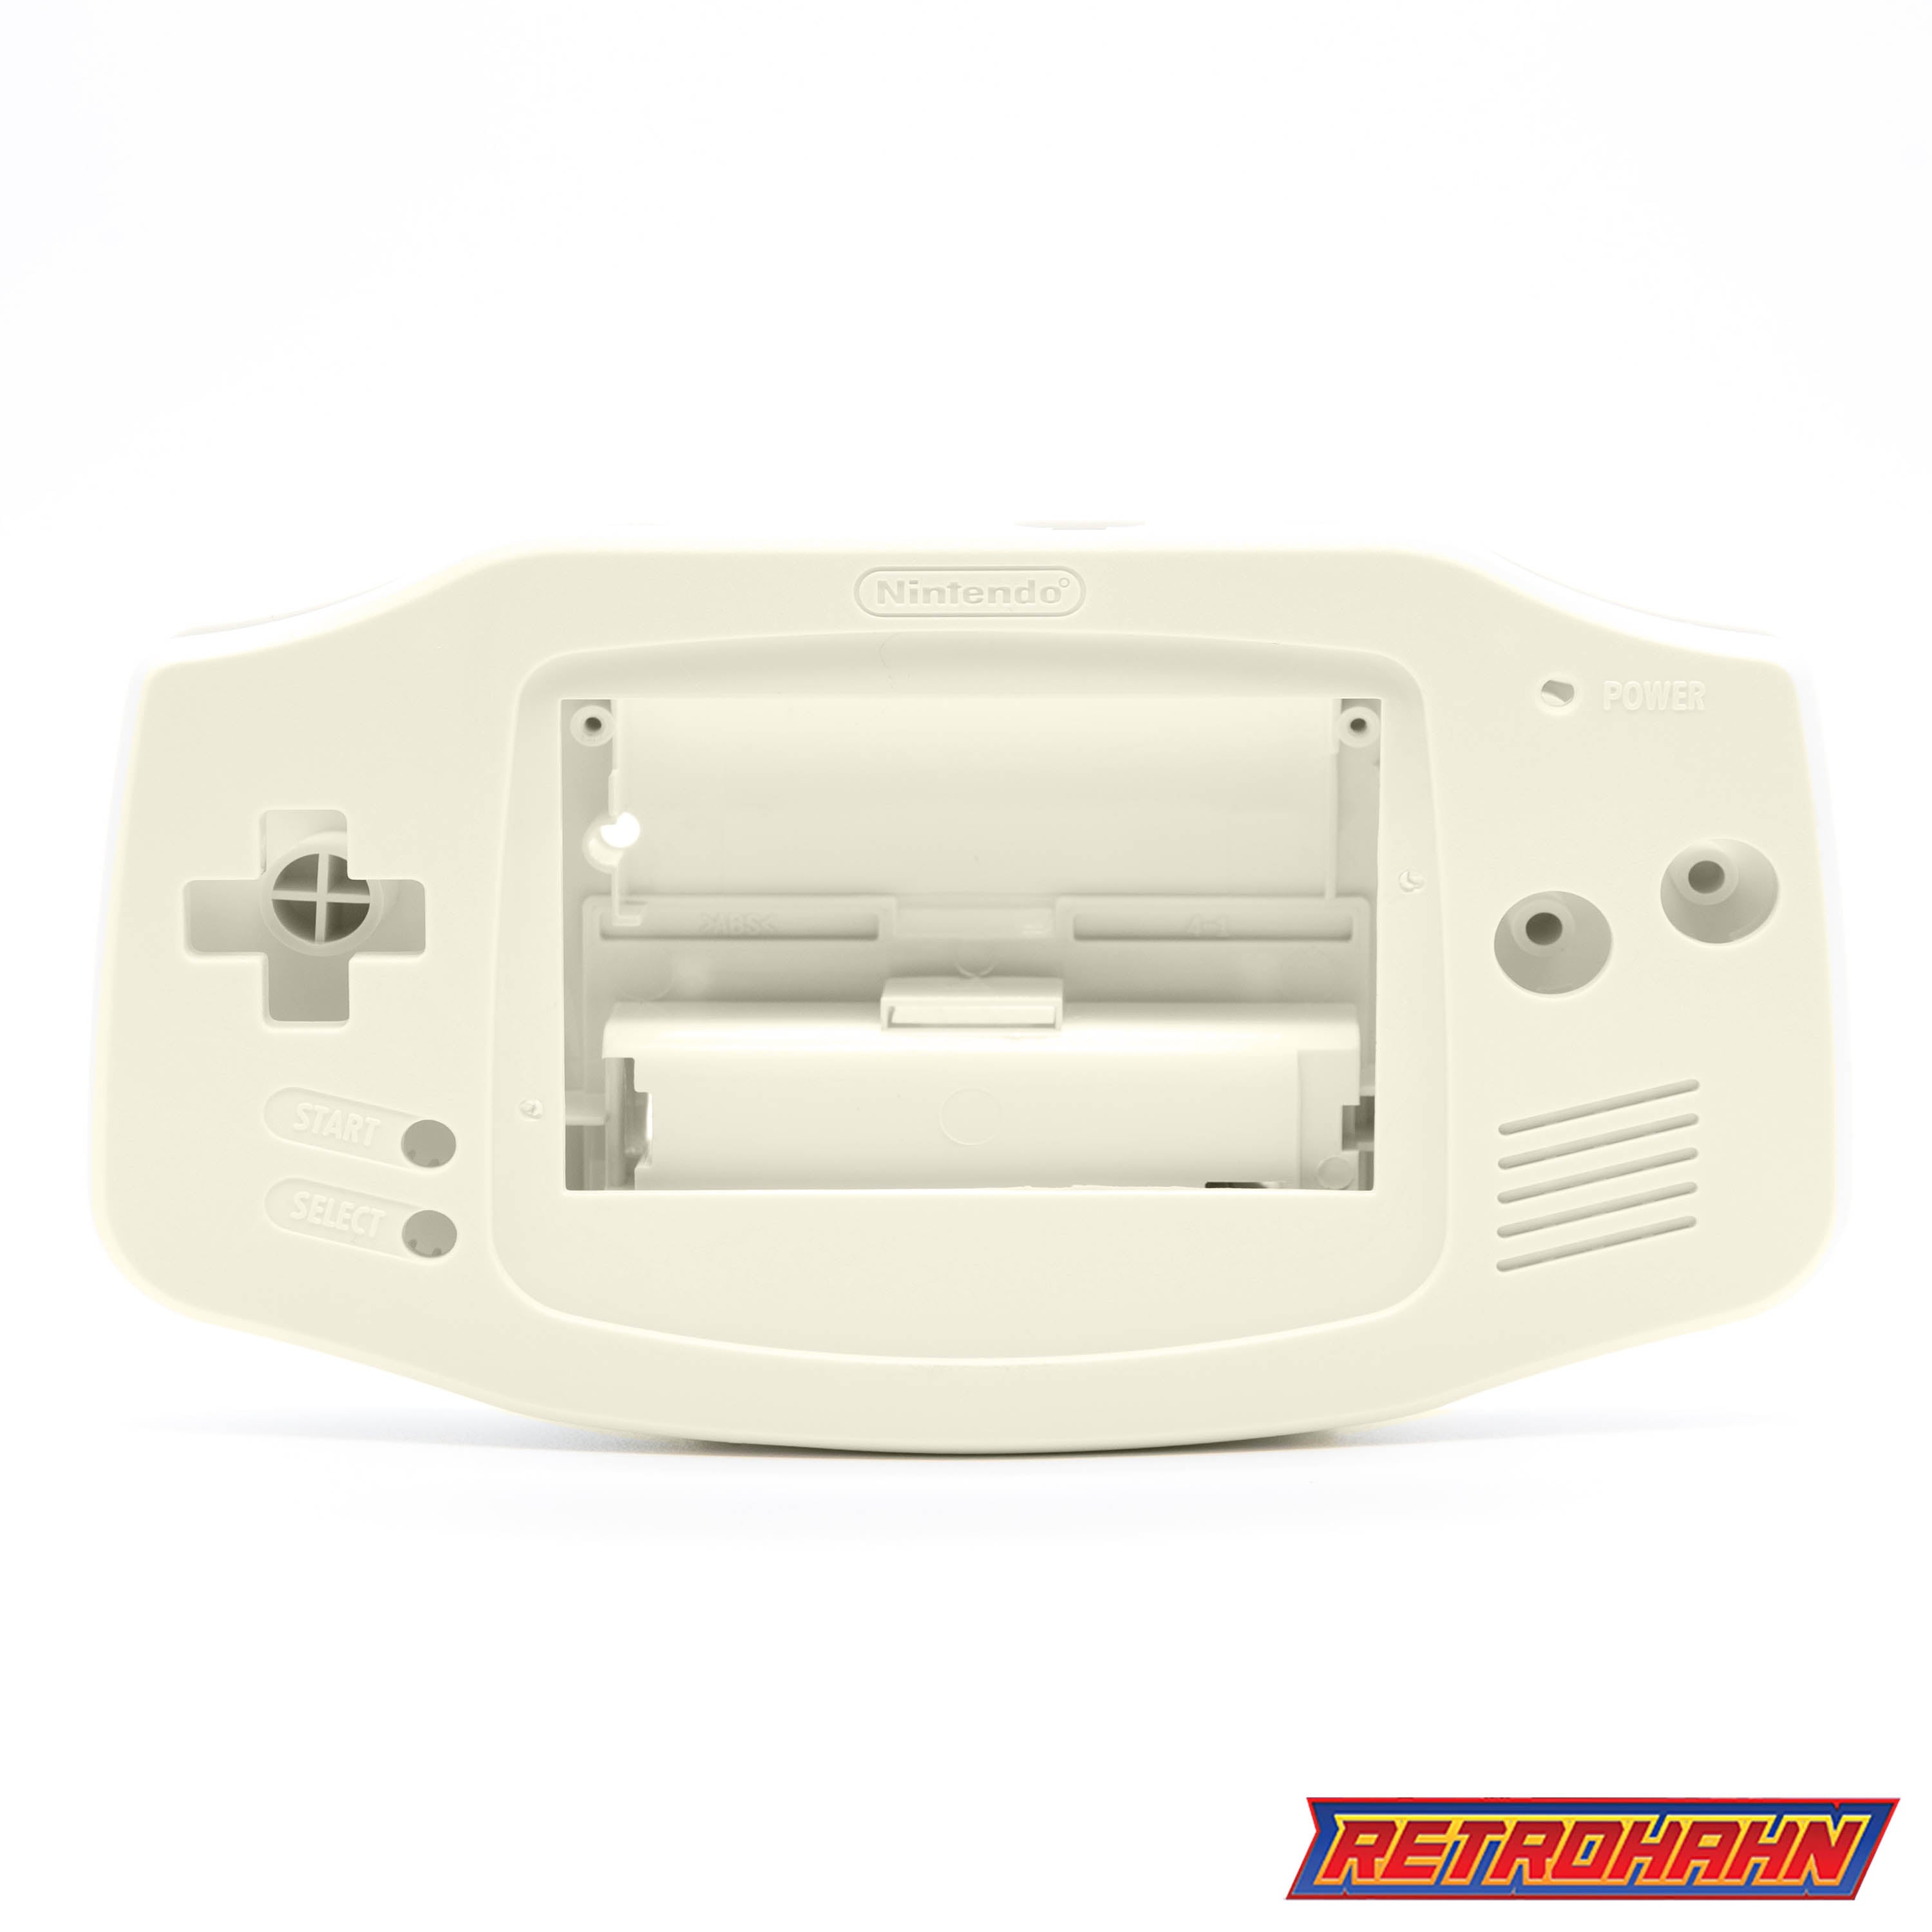 GameBoy Advance: Gehäuse IPS Ready